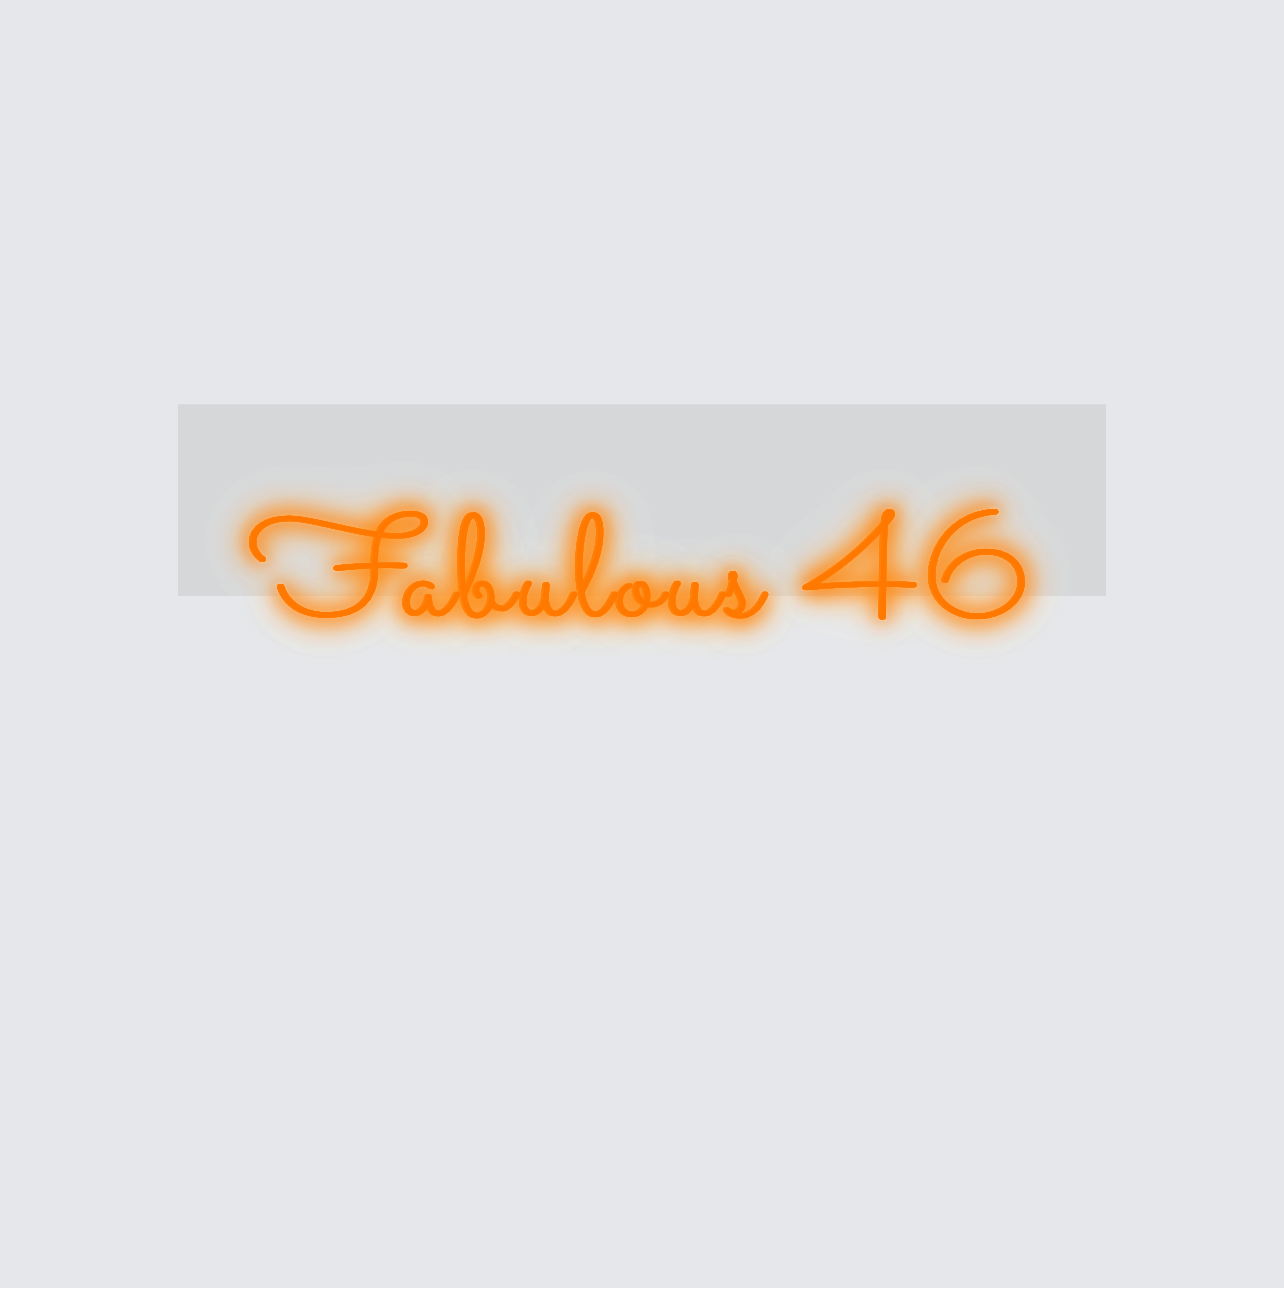 Custom neon sign - Fabulous 46